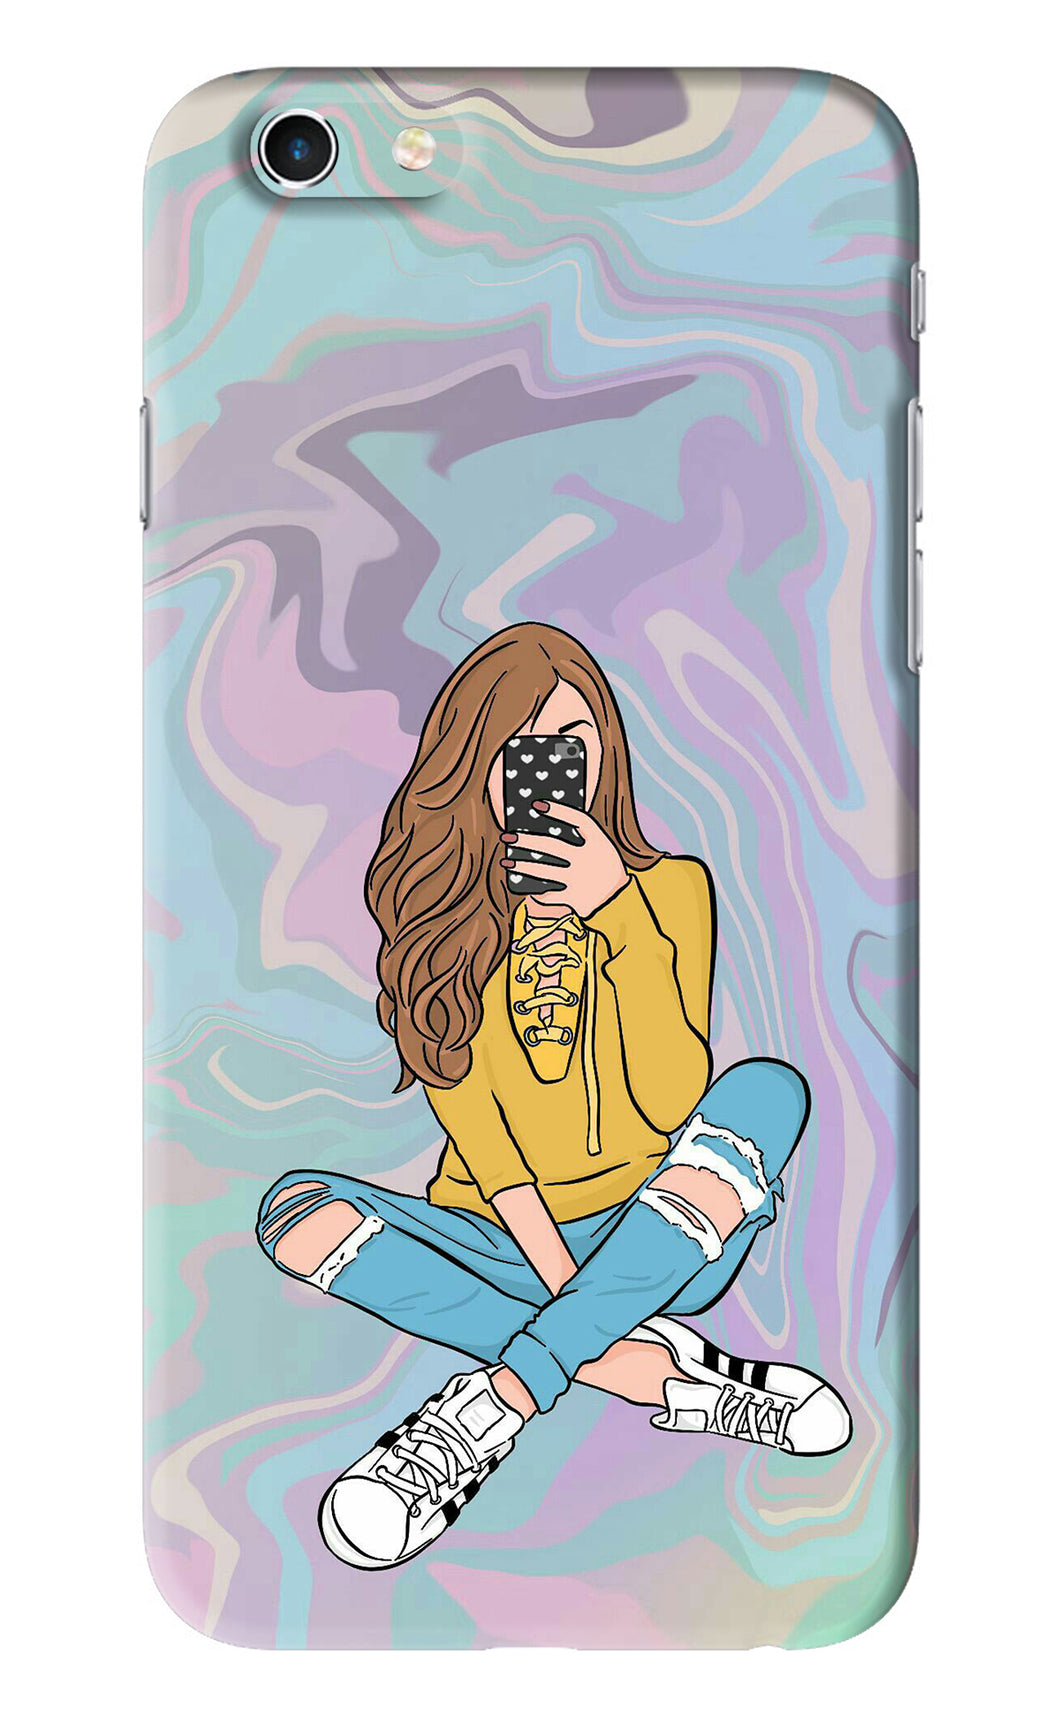 Selfie Girl iPhone 6S Back Skin Wrap